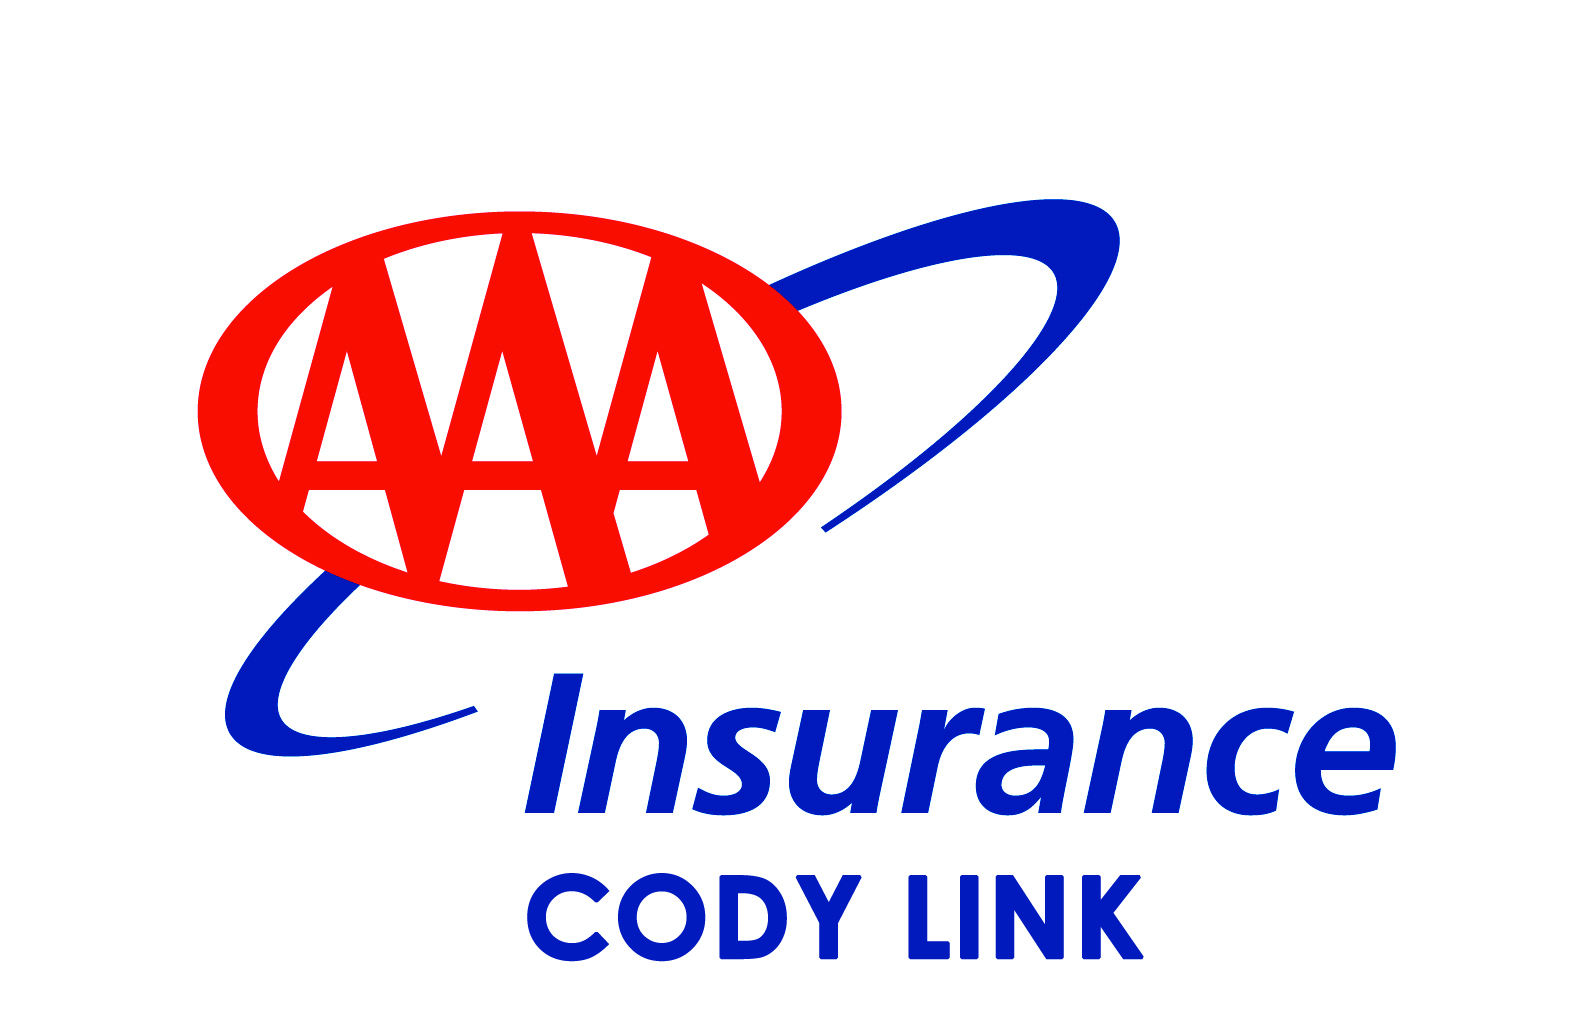 AAA Insurance - Cody Link